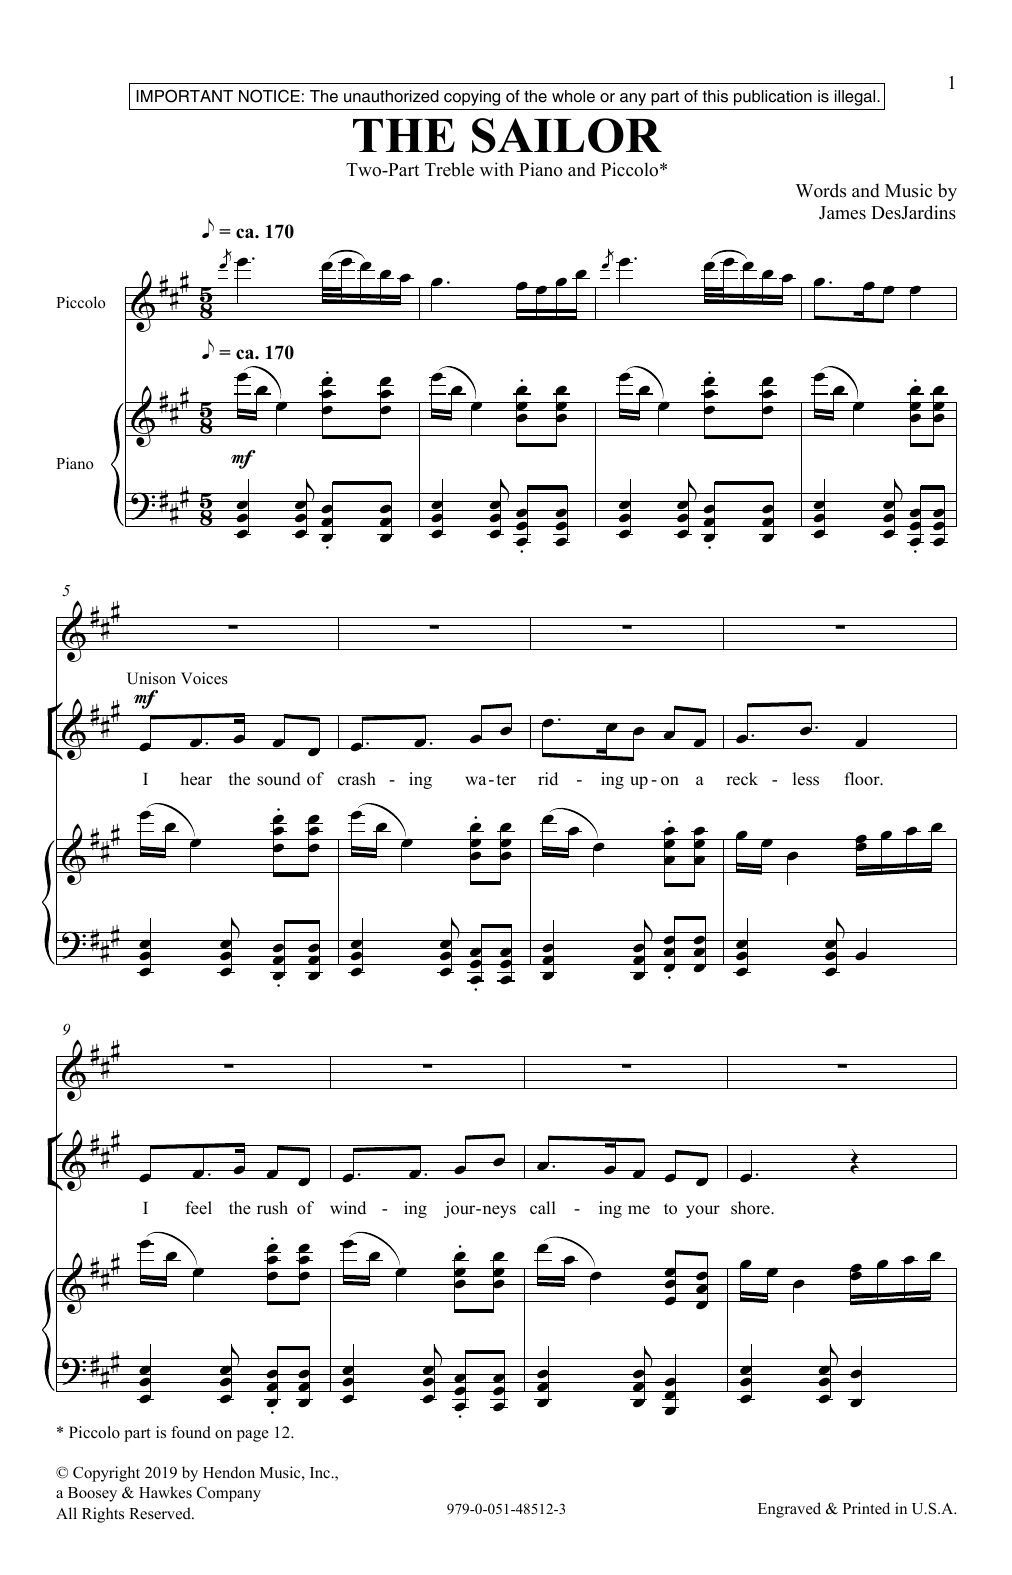 James DesJardins The Sailor Sheet Music Notes & Chords for 2-Part Choir - Download or Print PDF